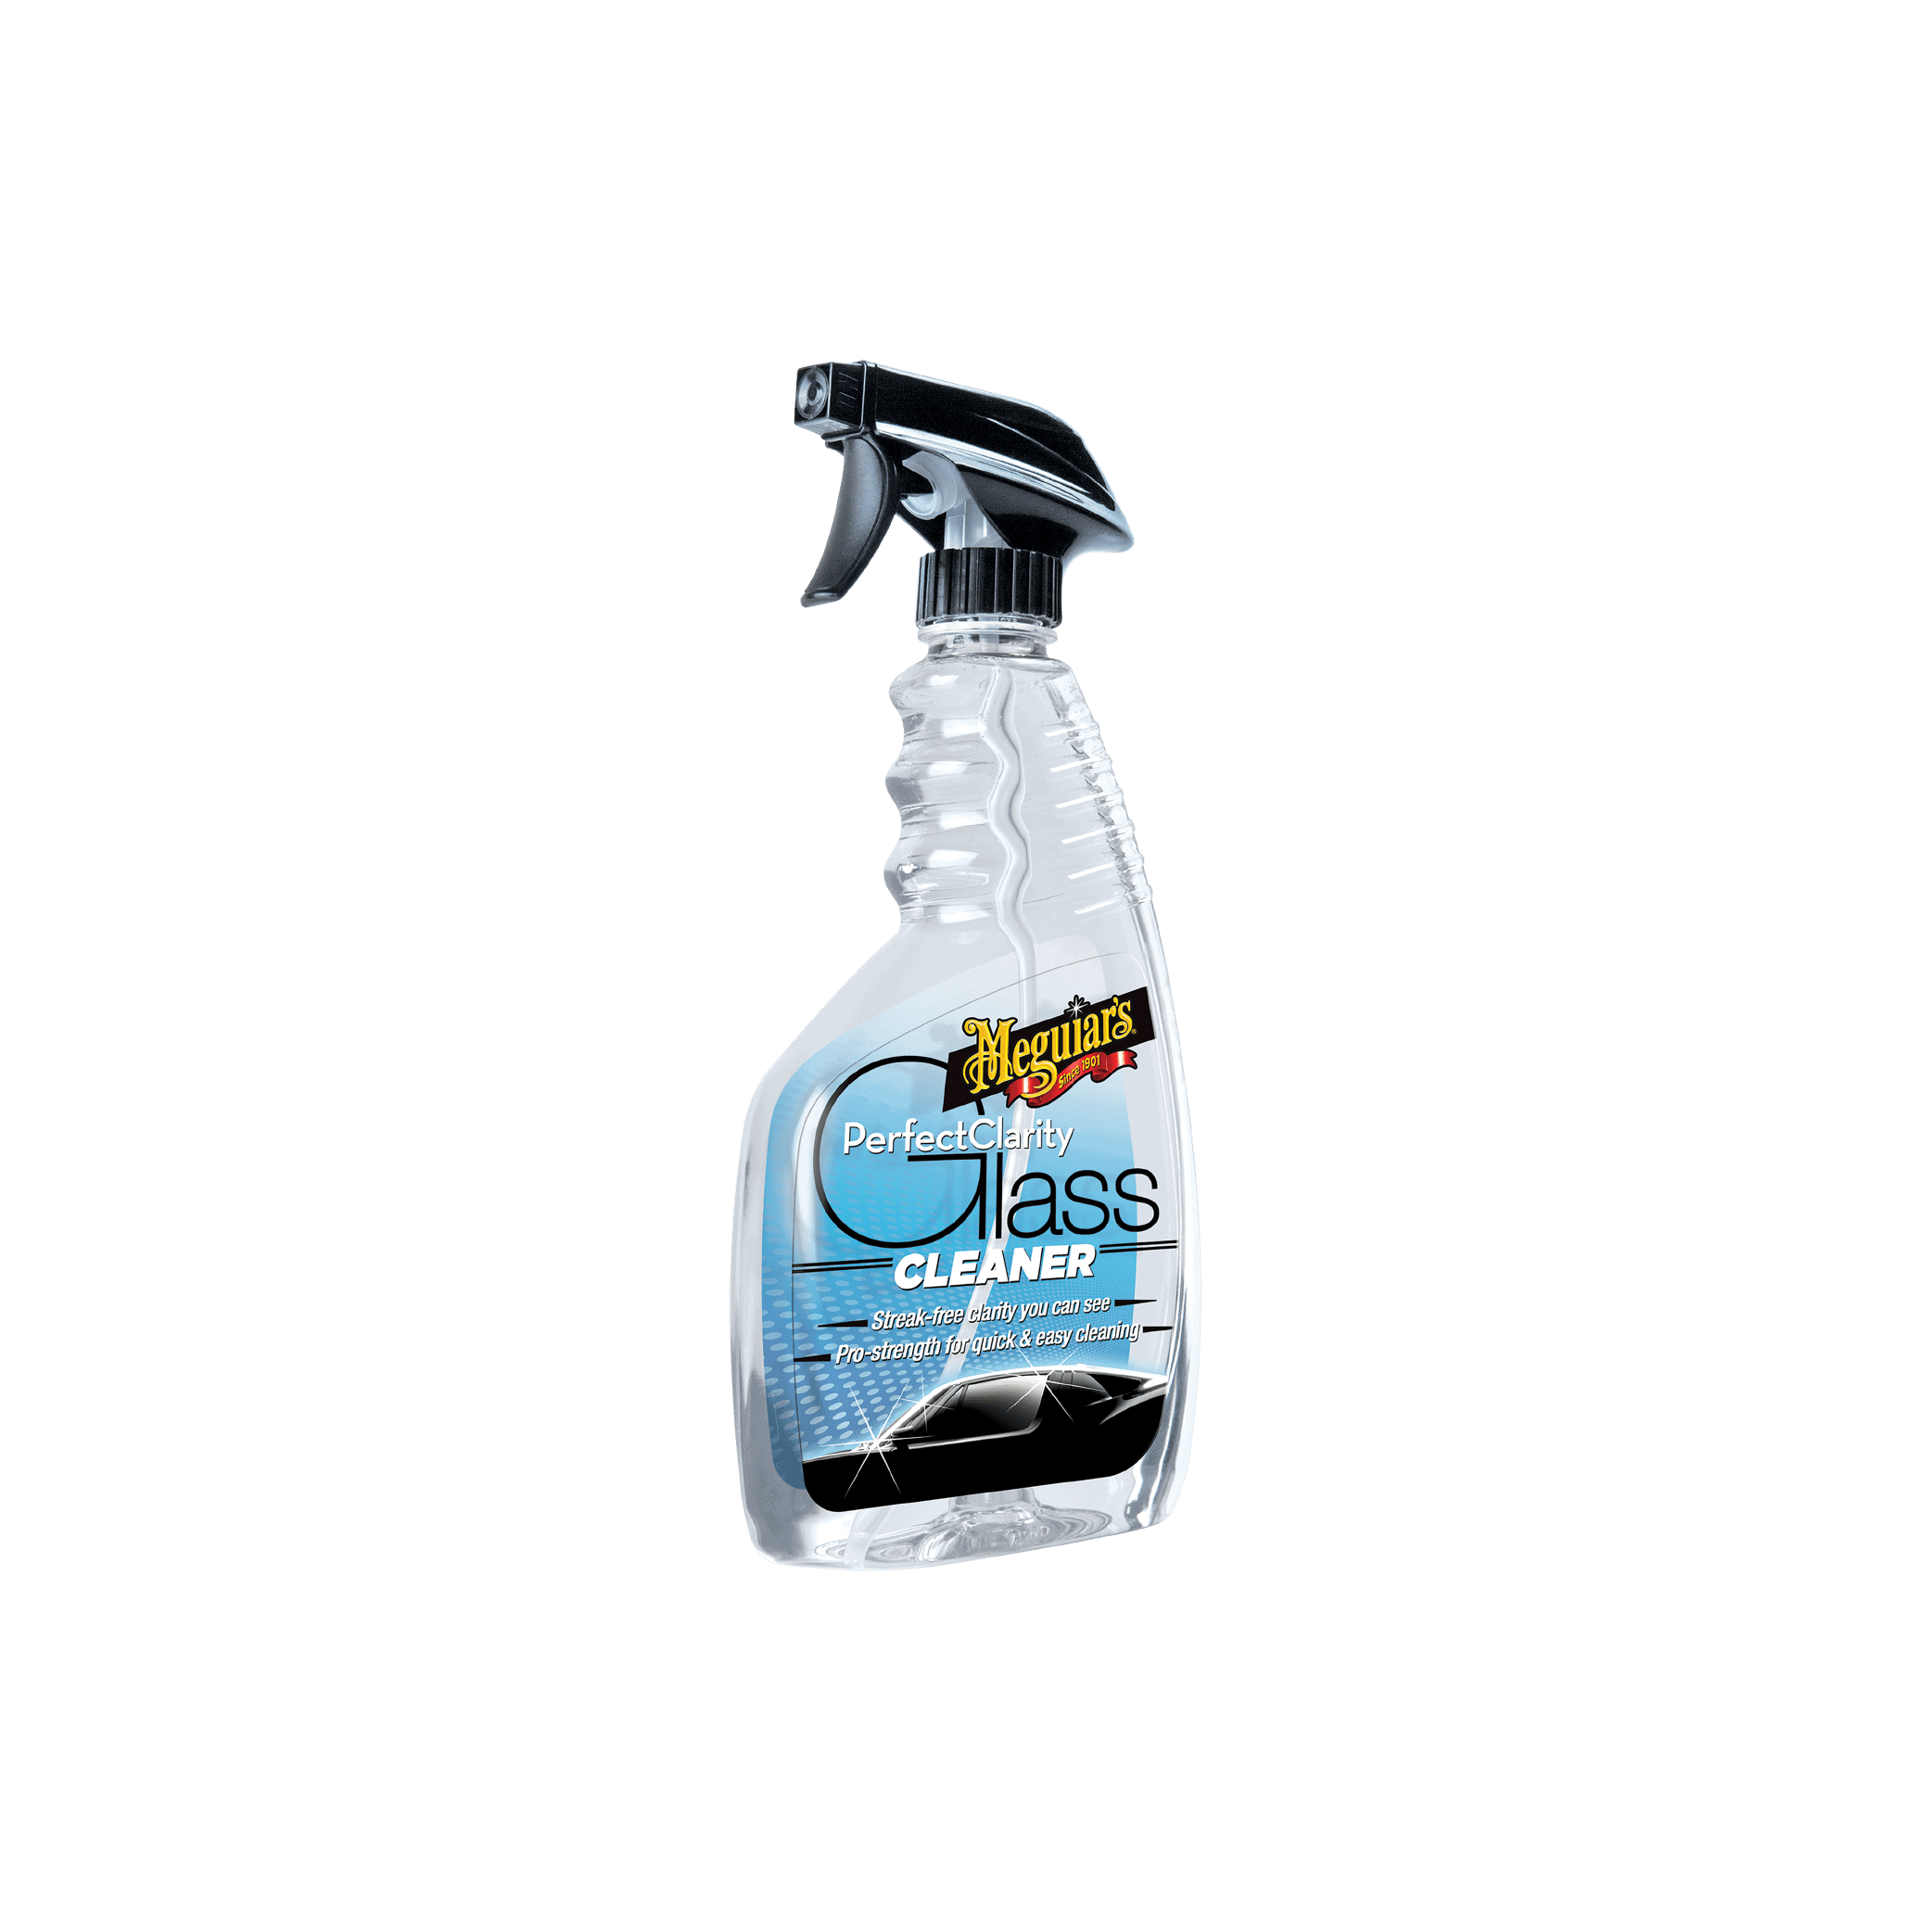 Wavex Windshield Washer Fluid (500ml) Liquid Vehicle Glass Cleaner Price in  India - Buy Wavex Windshield Washer Fluid (500ml) Liquid Vehicle Glass  Cleaner online at